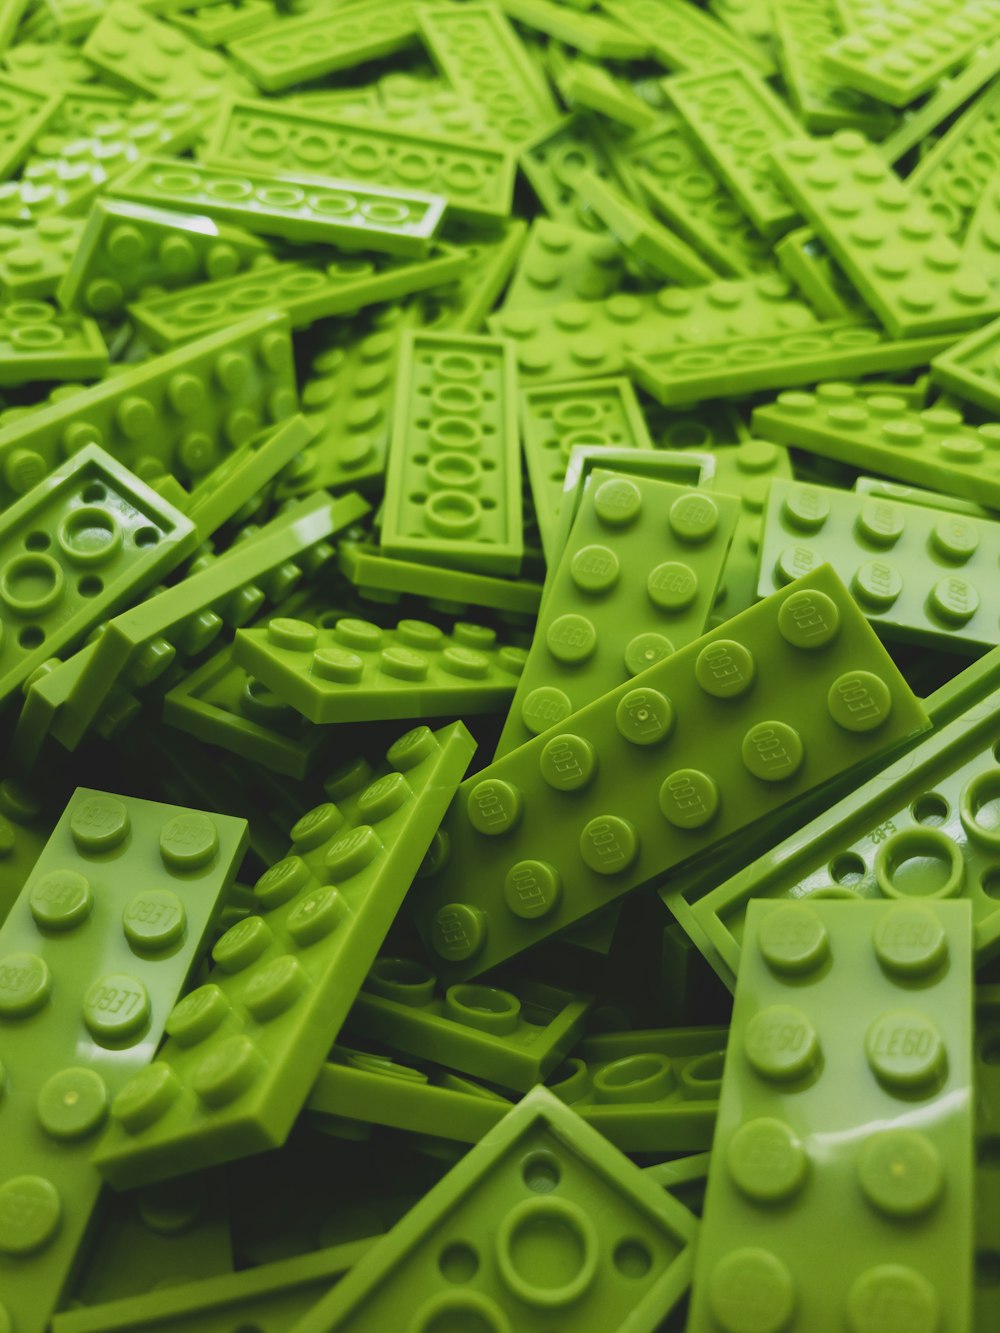 green Lego block lot